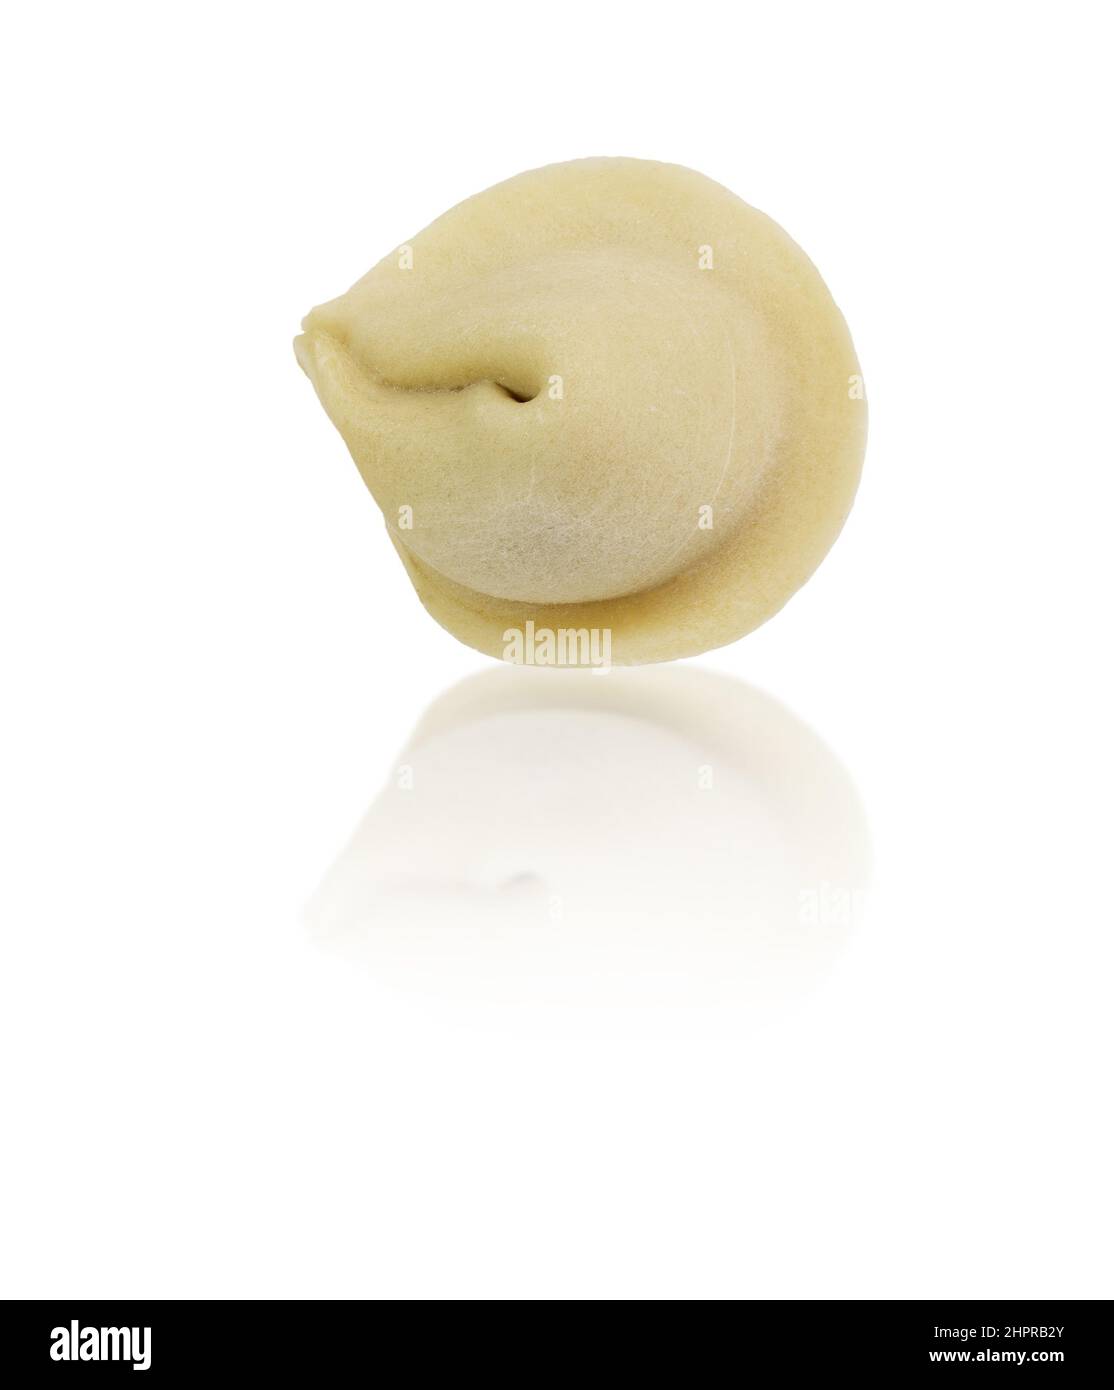 Dumplings, pelmeni, ravioli - isolated on white with clipping path Stock Photo